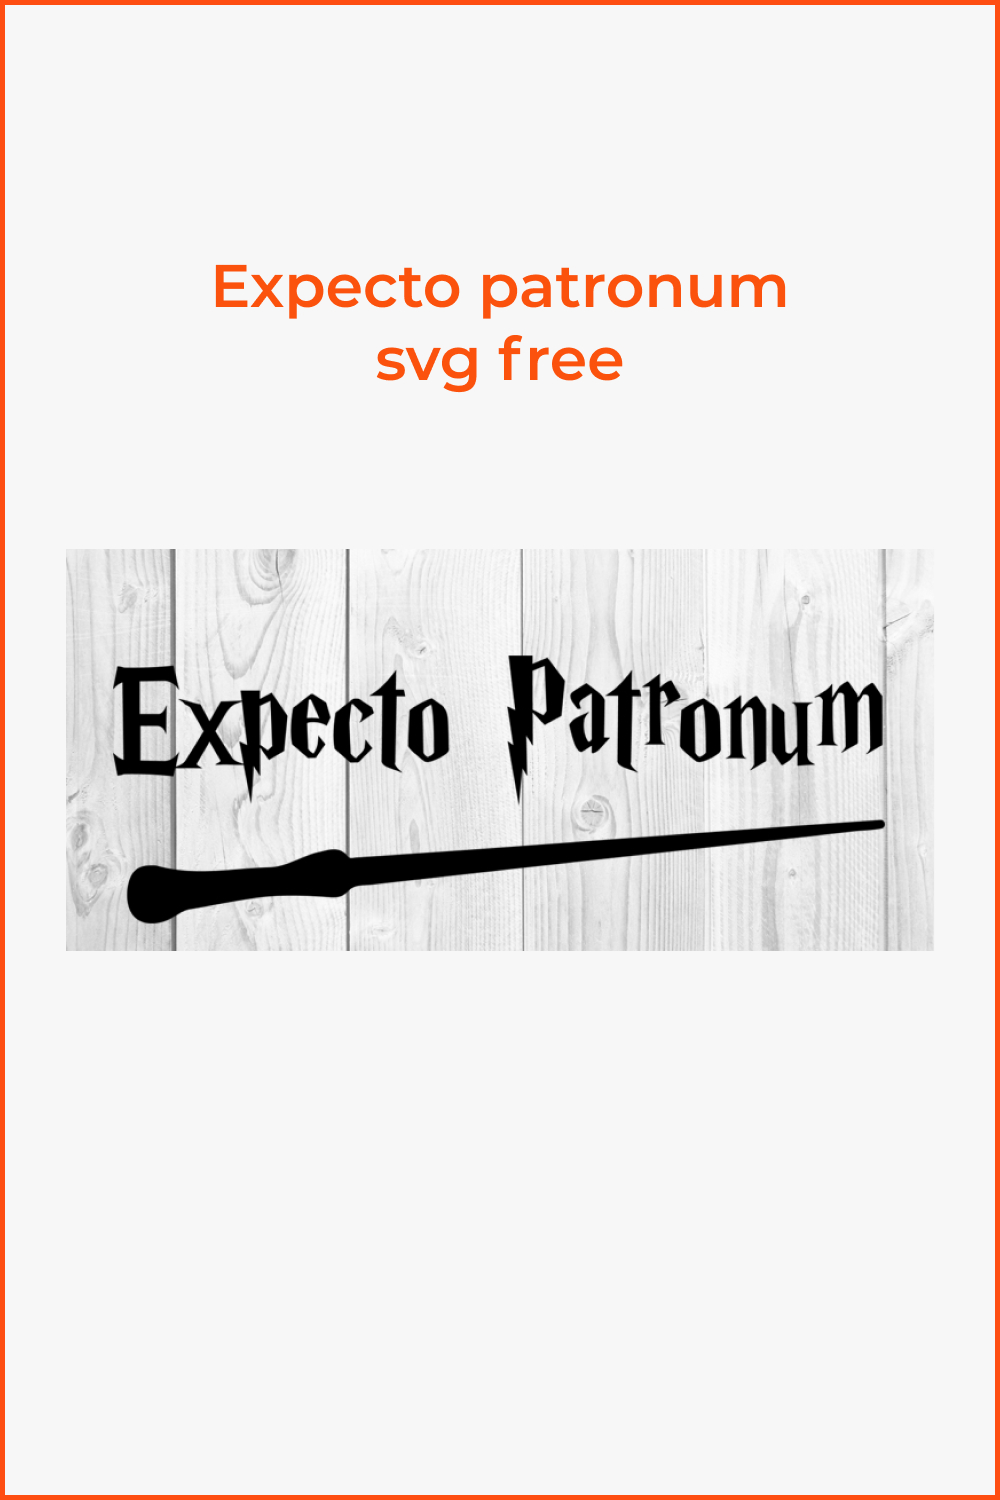 Image of magic wand and phrase Expecto Patronum.